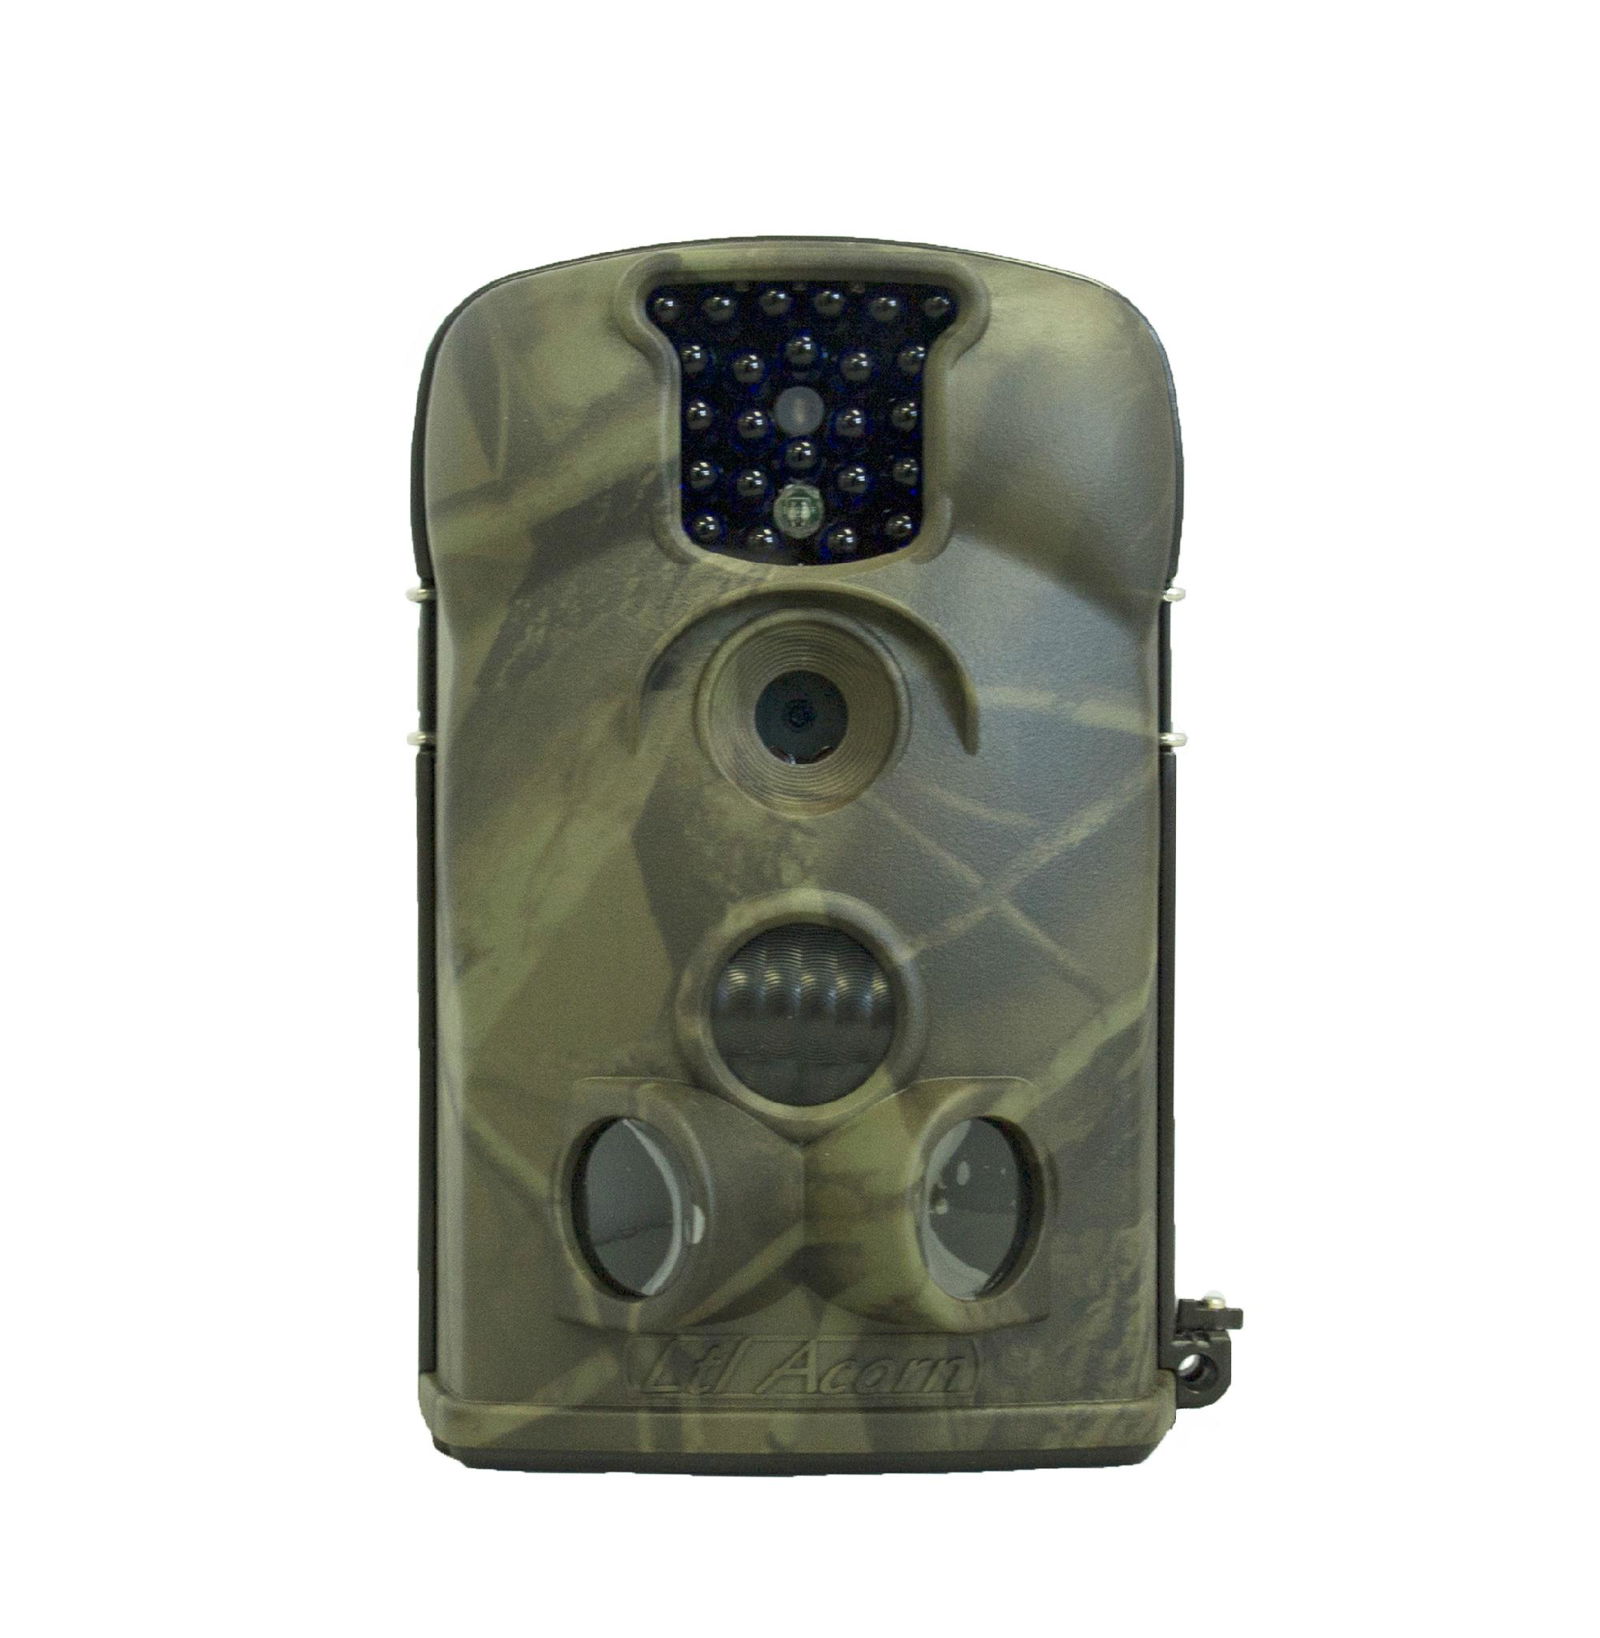 Ltl acorn waterproof 1080p sms mms trail camera camouflaged camera 3